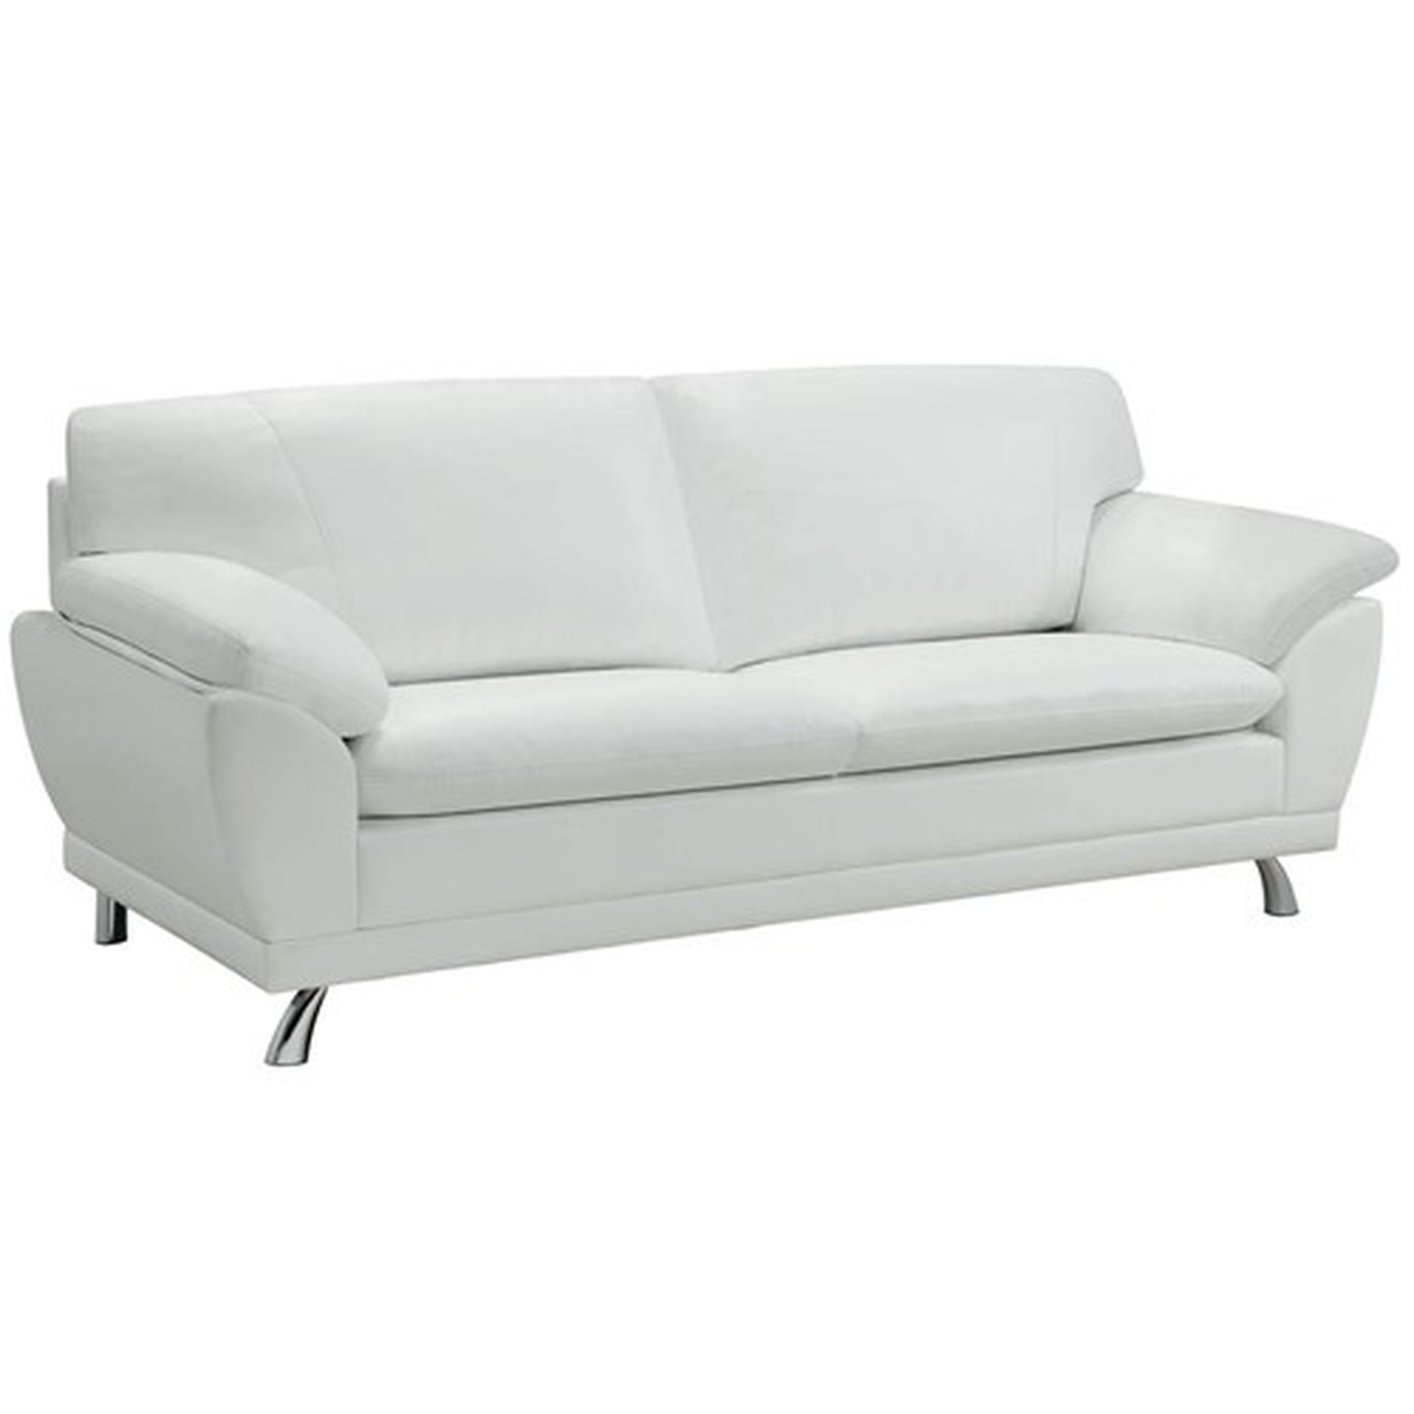 robyn white leather sofa robyn white leather sofa ... PGATHLI